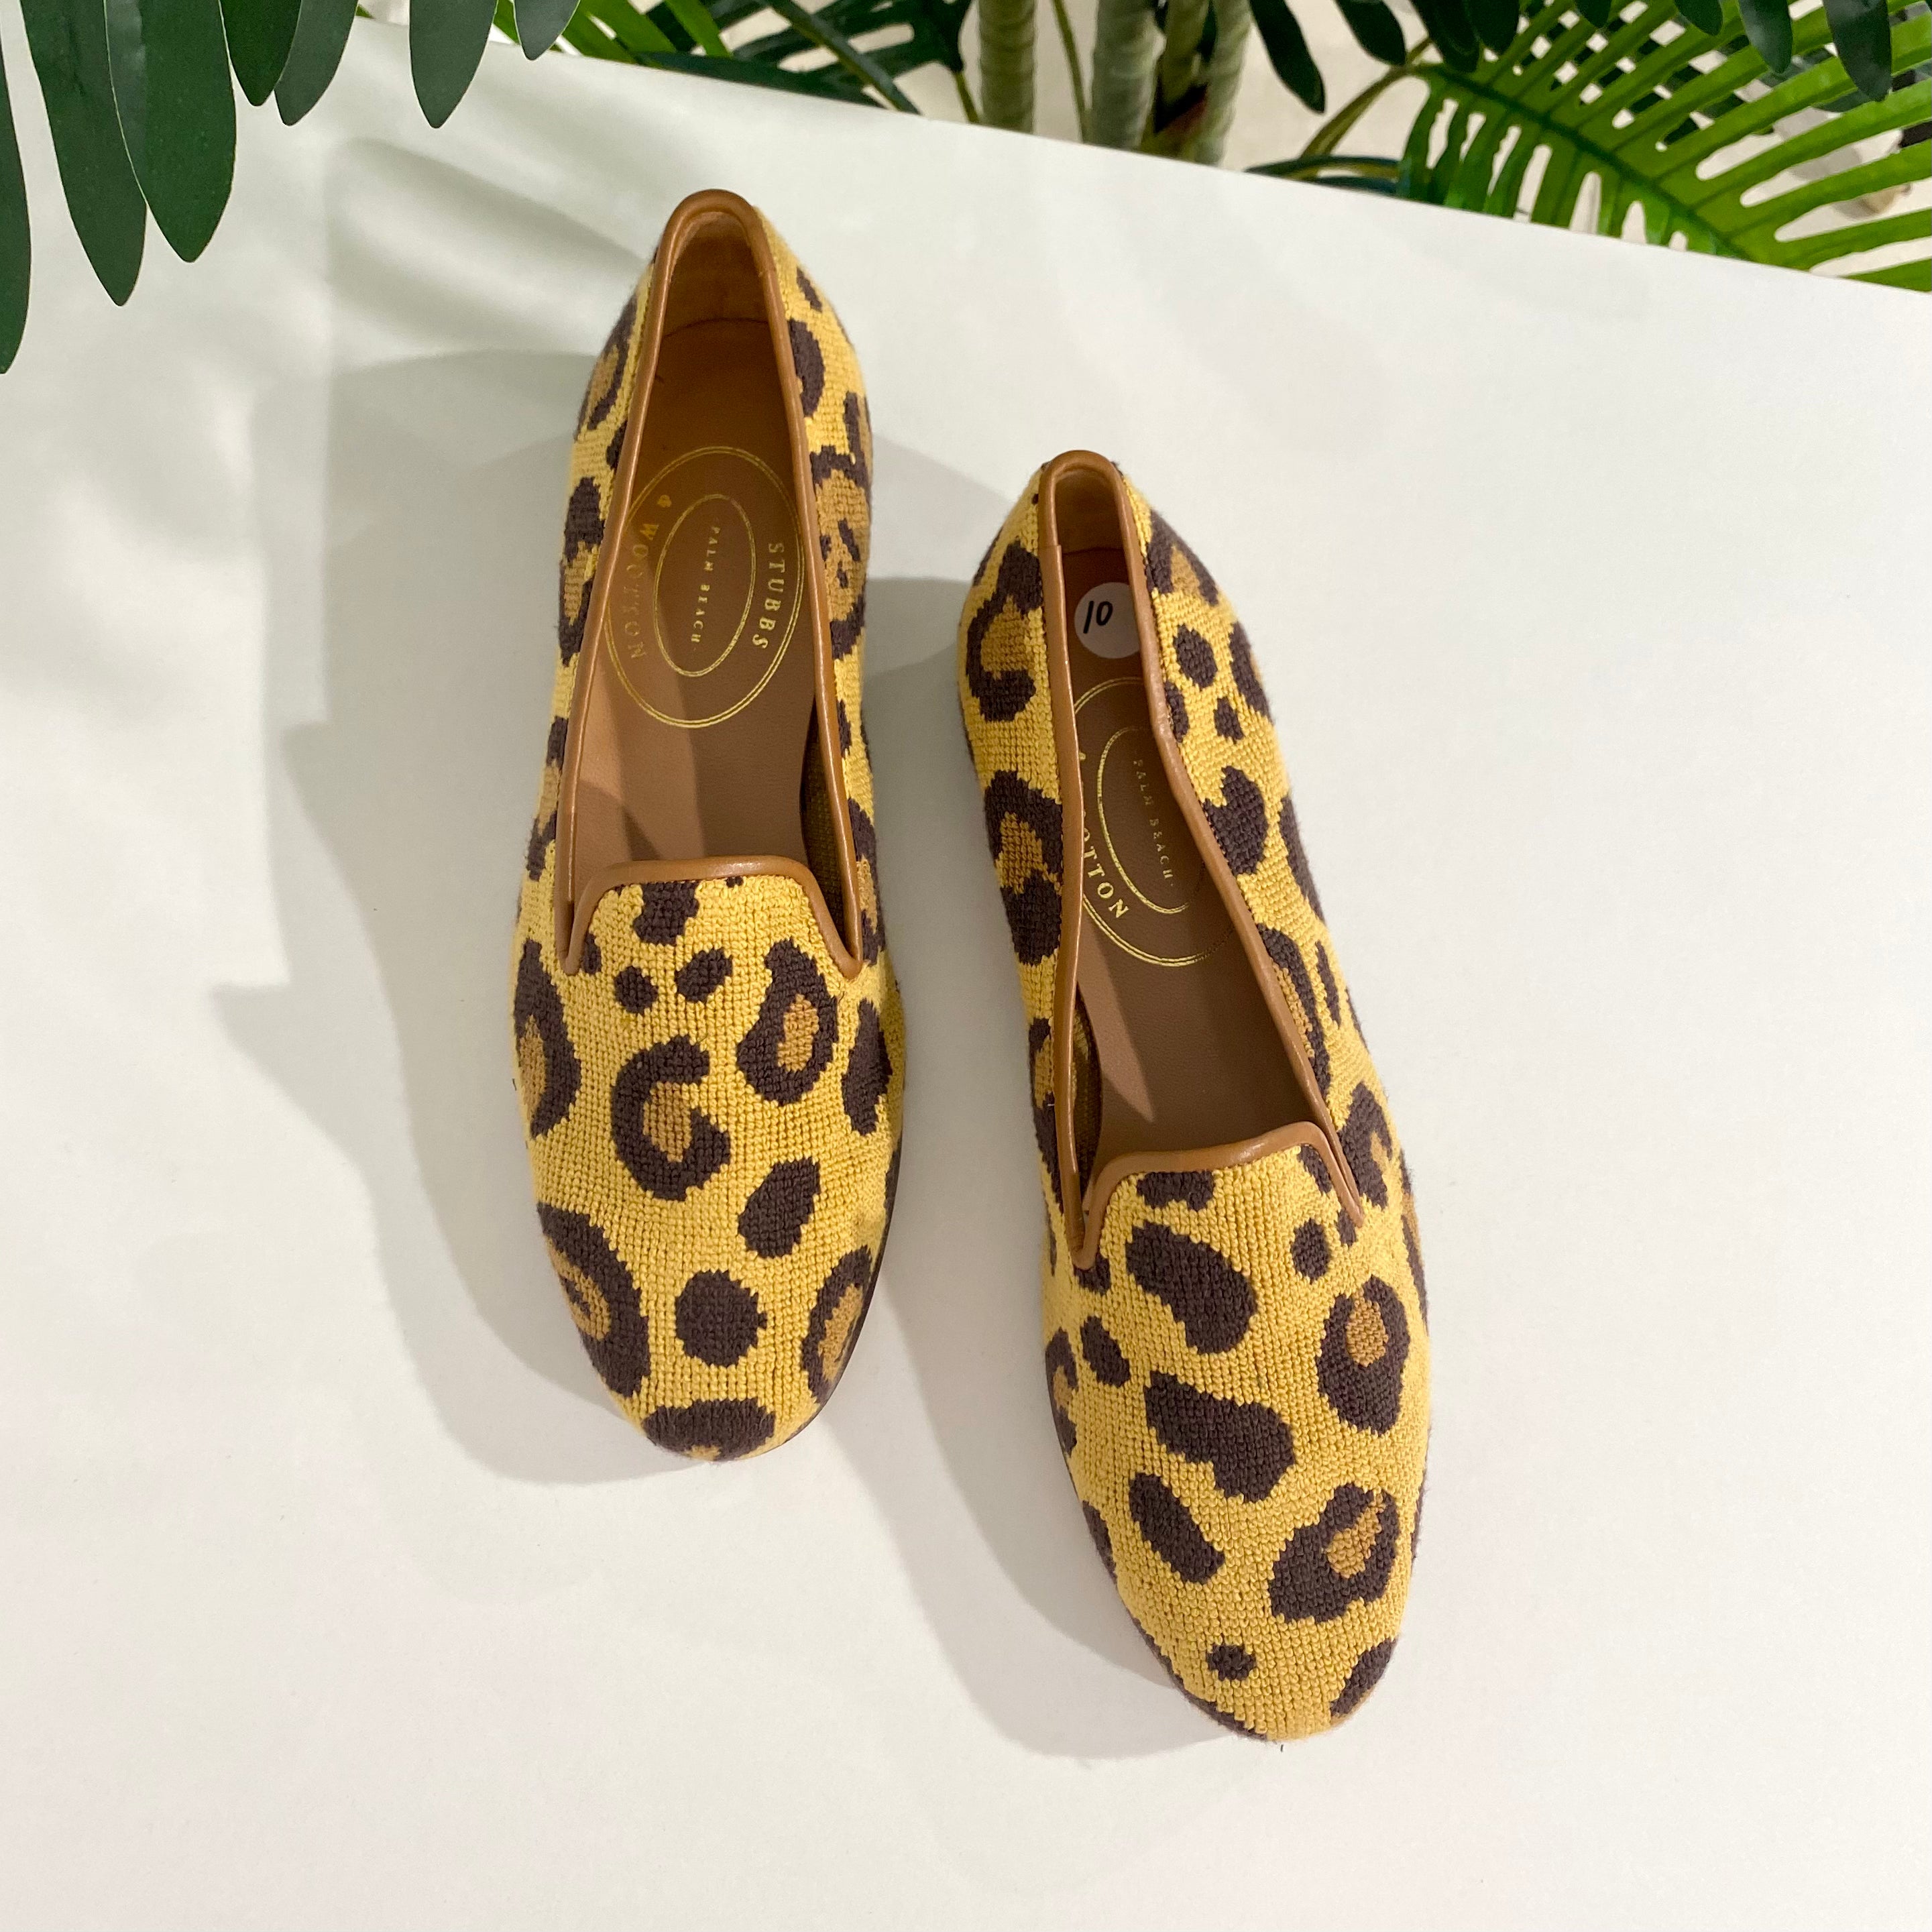 Stubbs & Wootton Leopard Loafers size 10